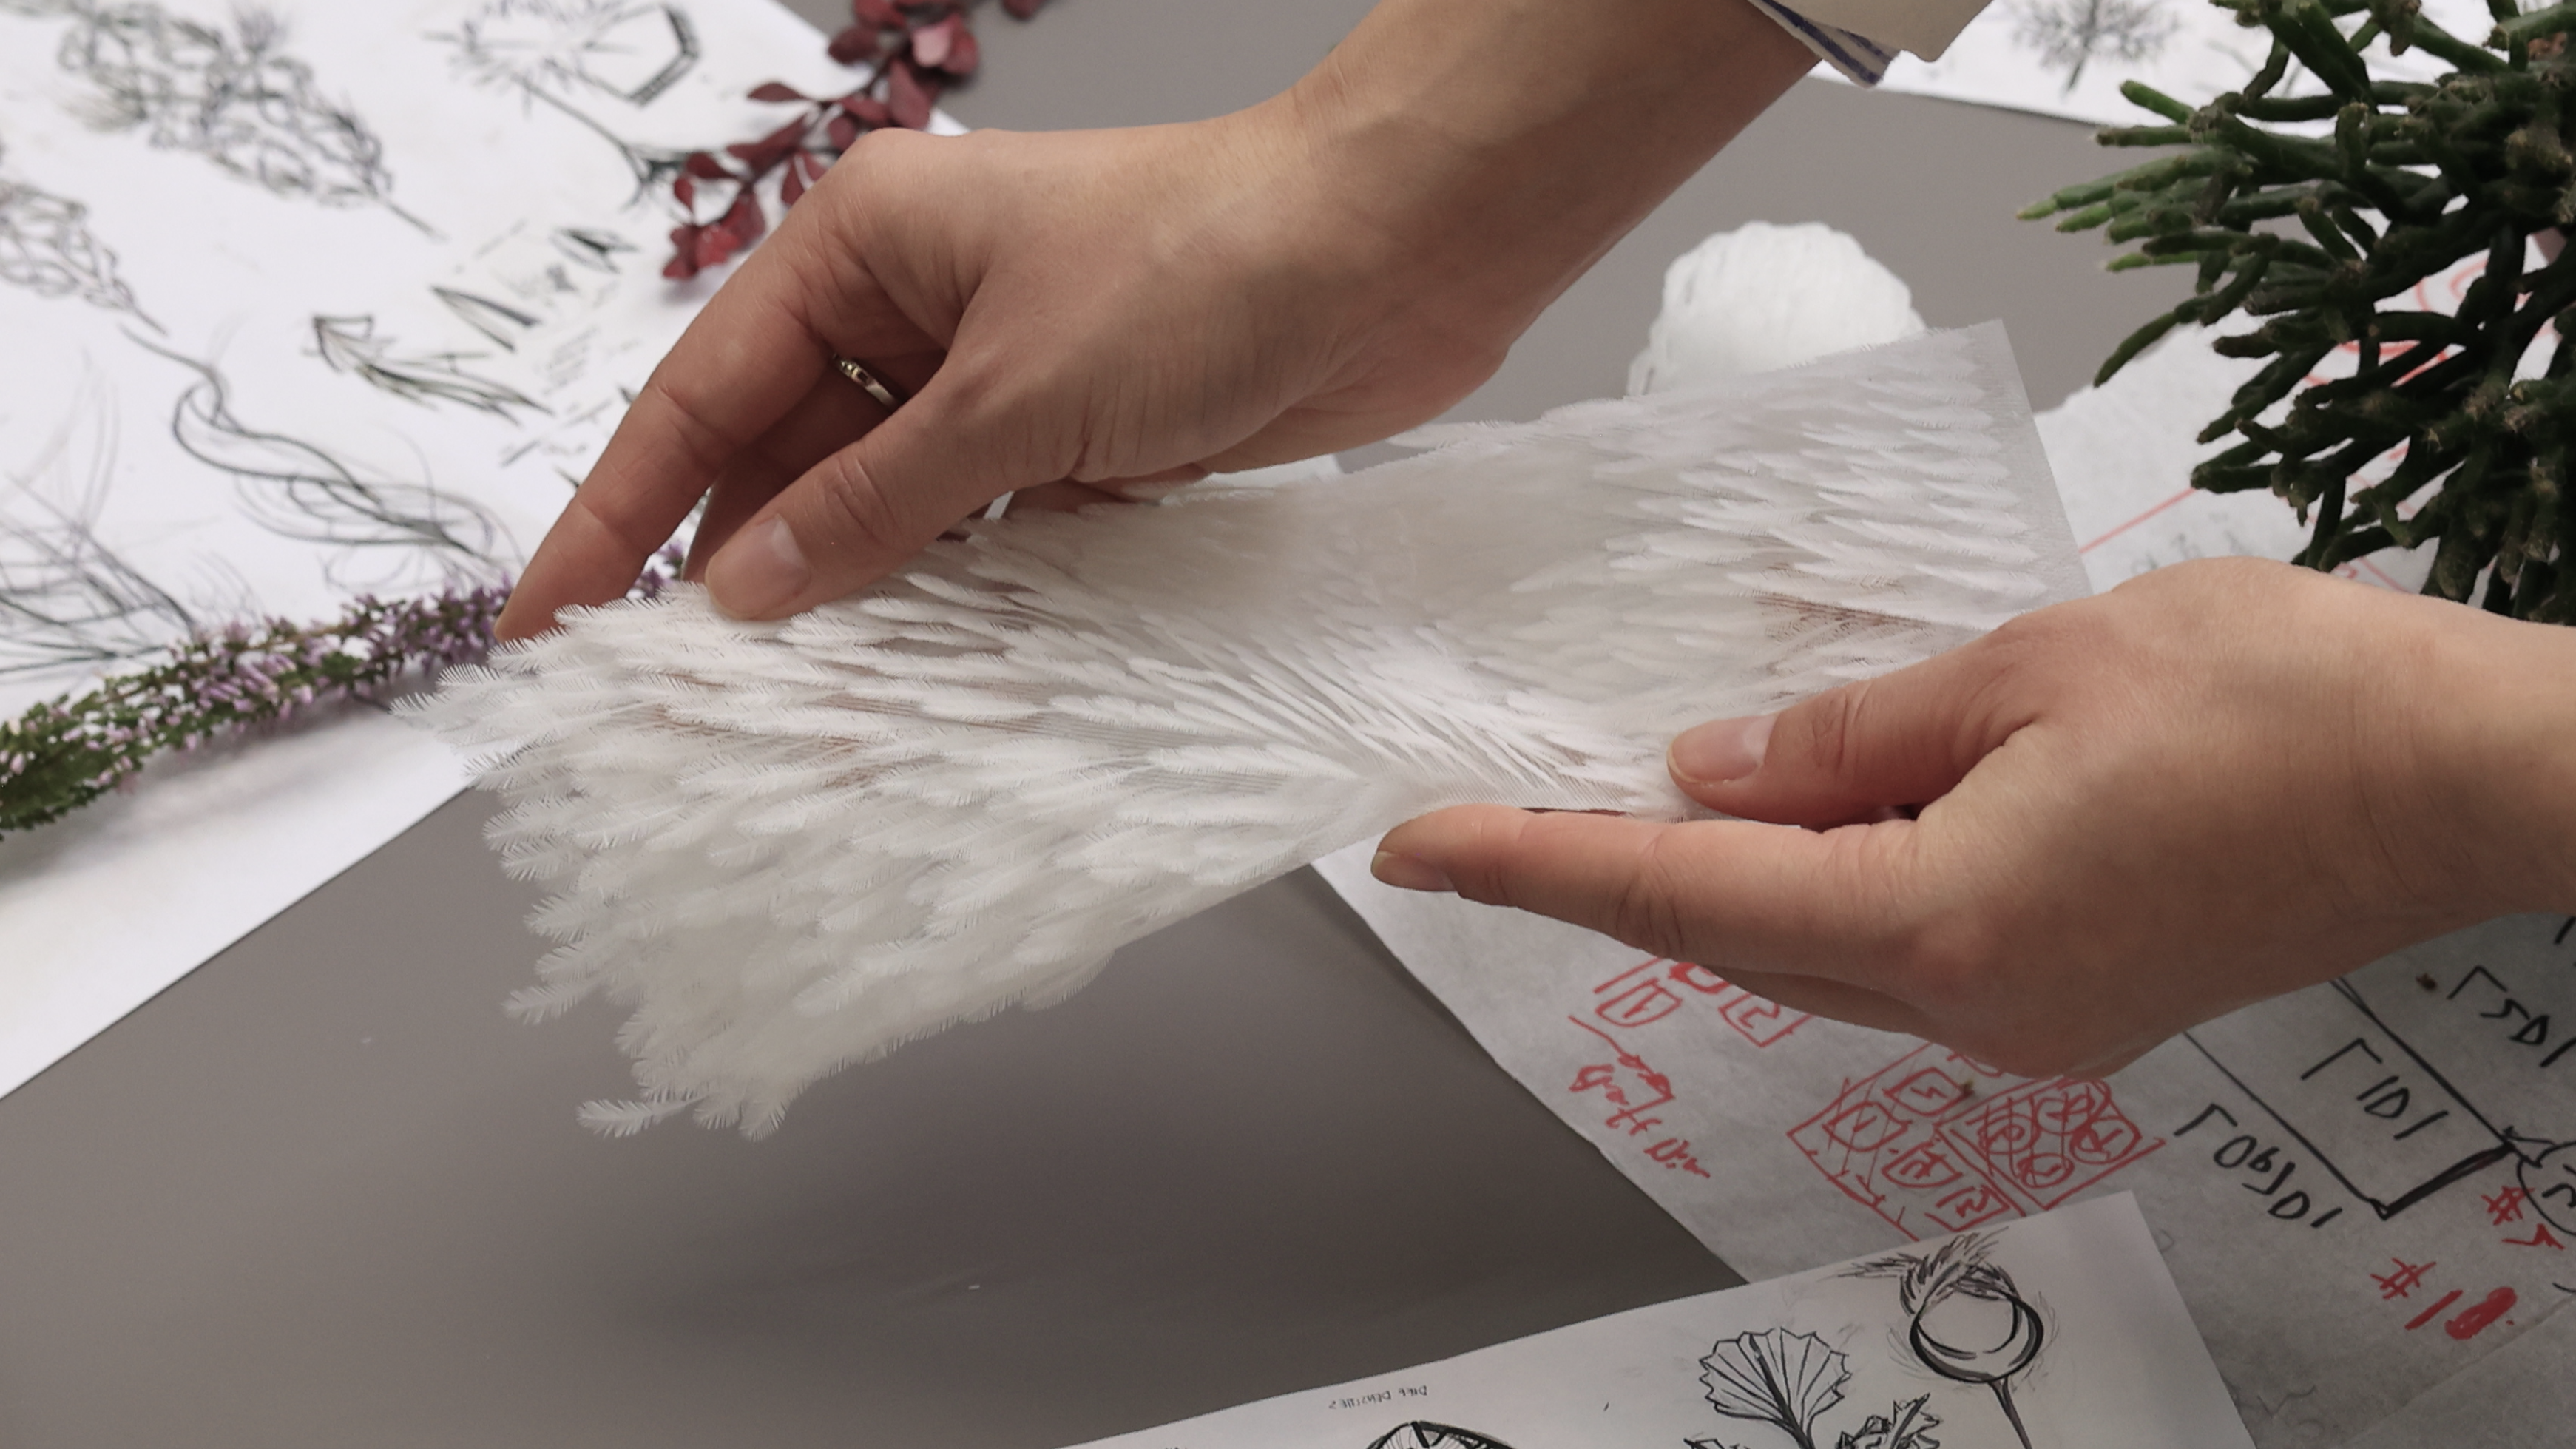 OPT Industries 3D printed feathers being held